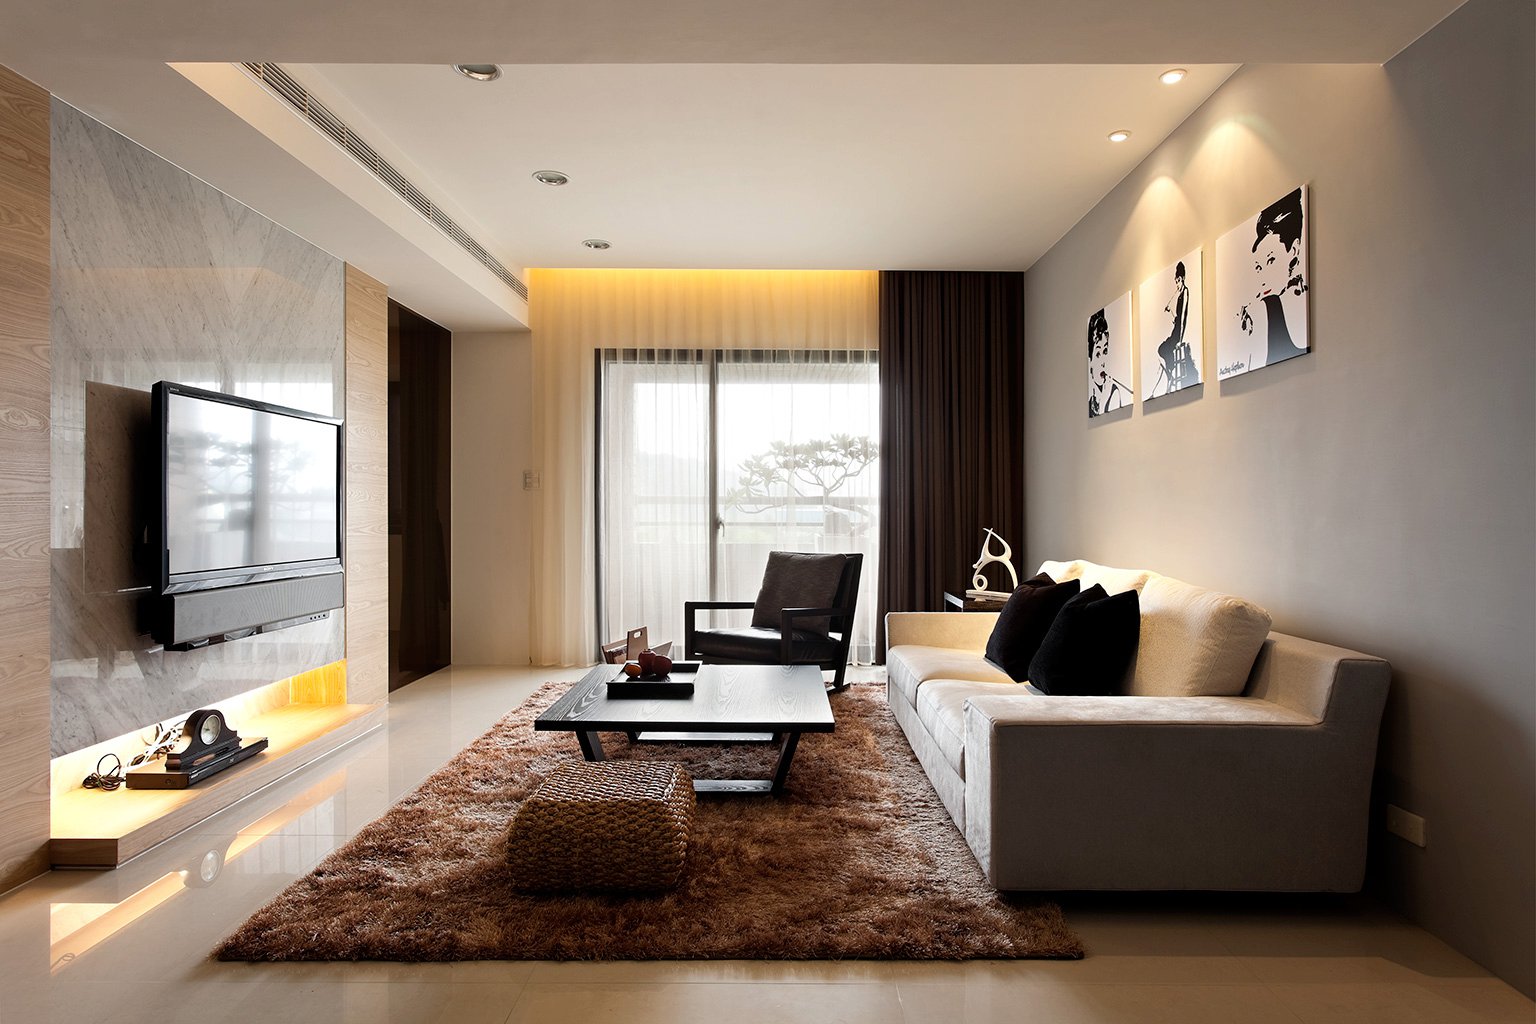 Modern Minimalist Decor With A Homey Flow, Living Room Design Ideas Modern